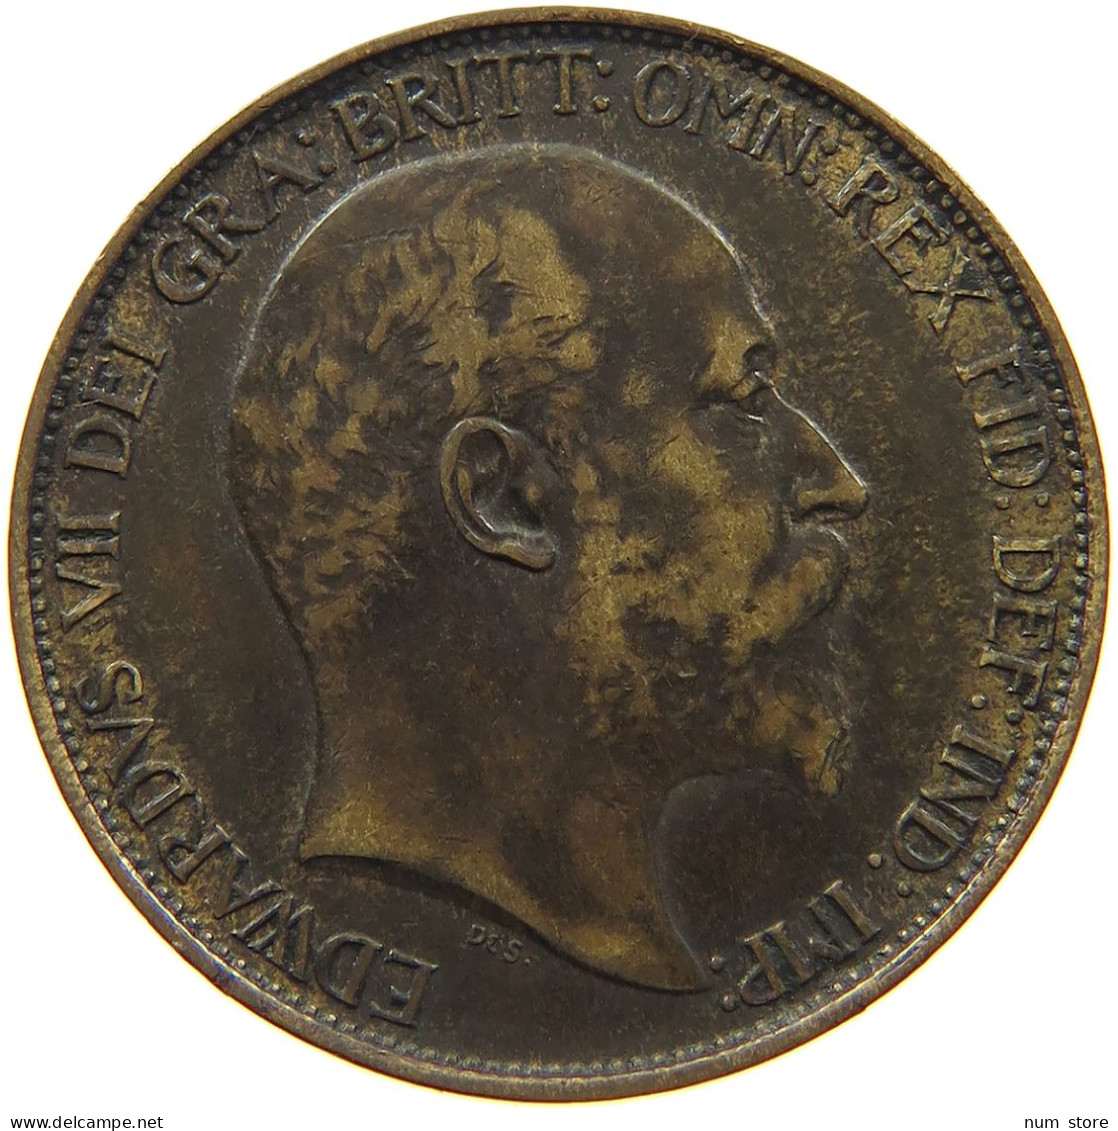 GREAT BRITAIN HALFPENNY 1905 Edward VII., 1901 - 1910 #s019 0279 - C. 1/2 Penny